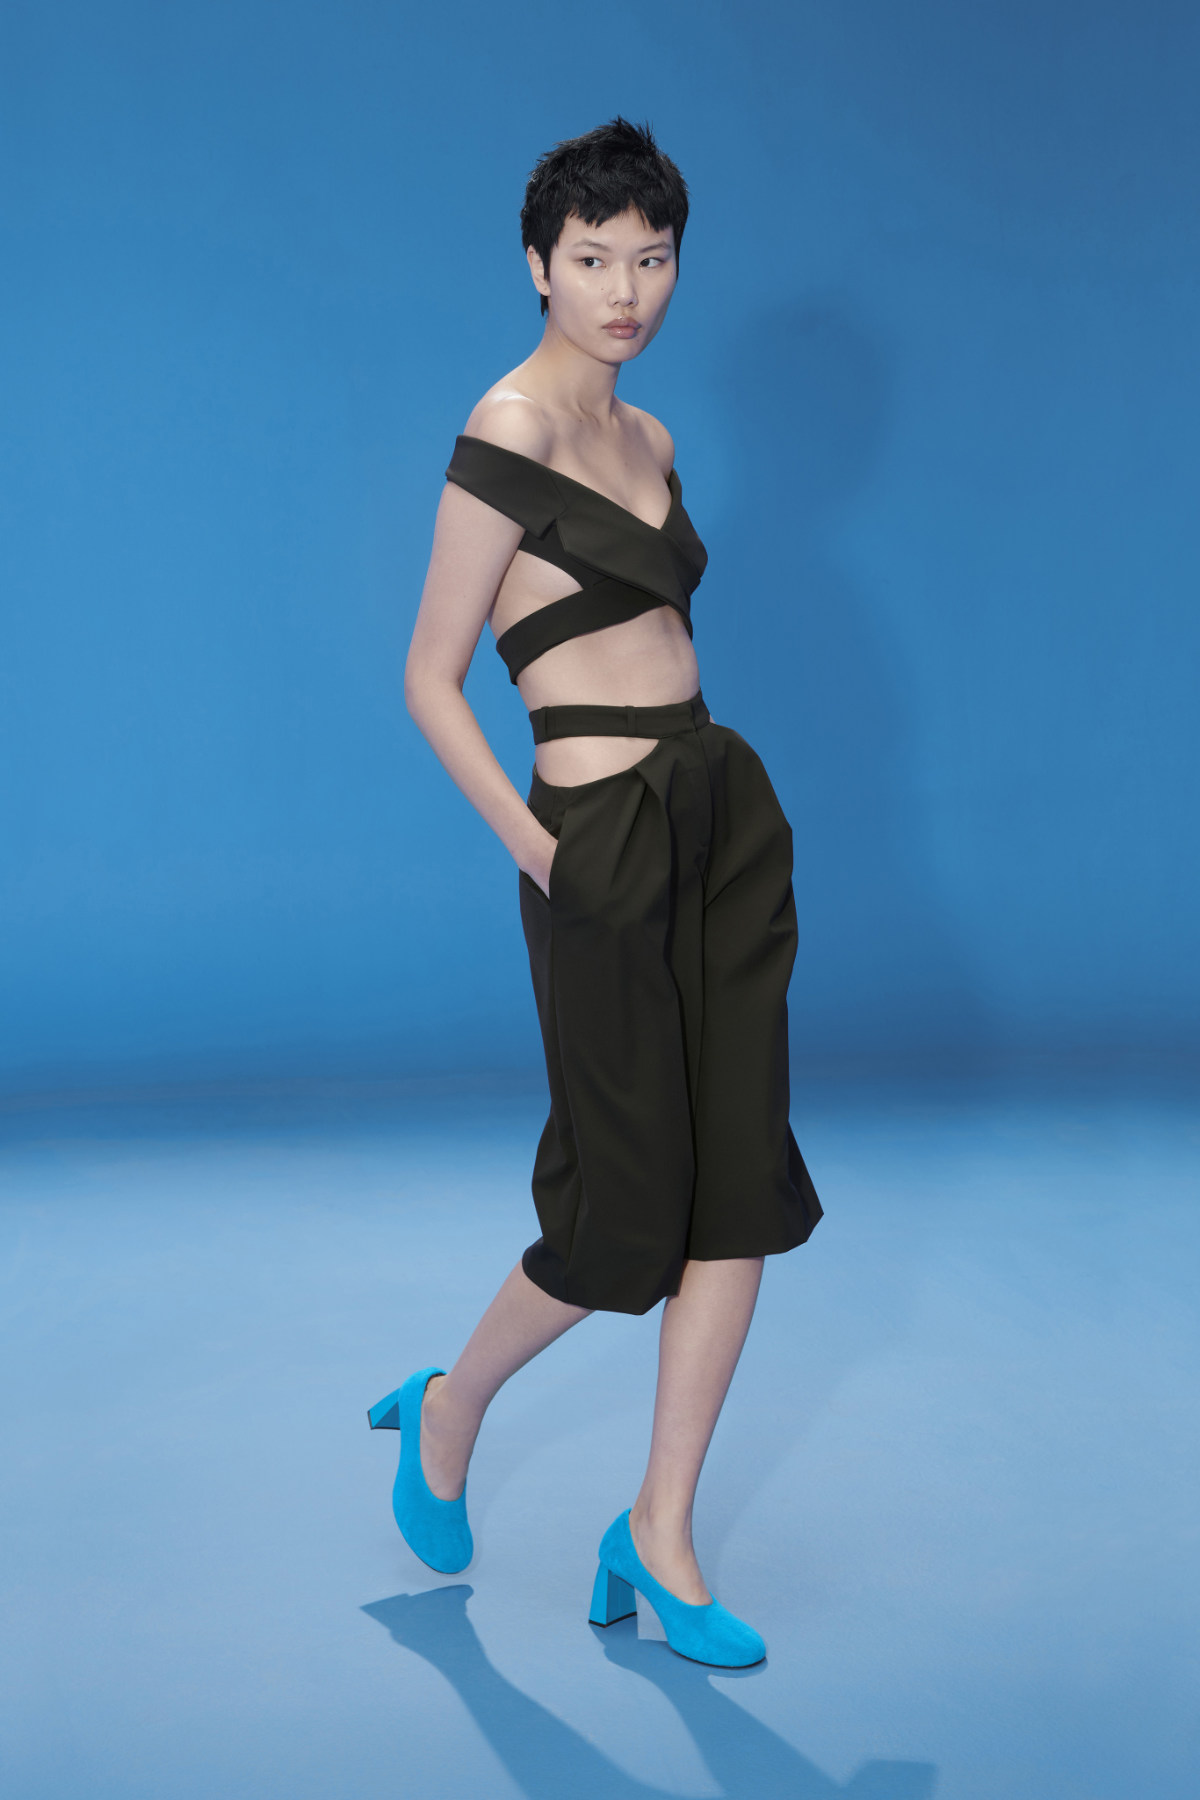 Nina Ricci Presents Its New Spring-Summer 2022 Collection